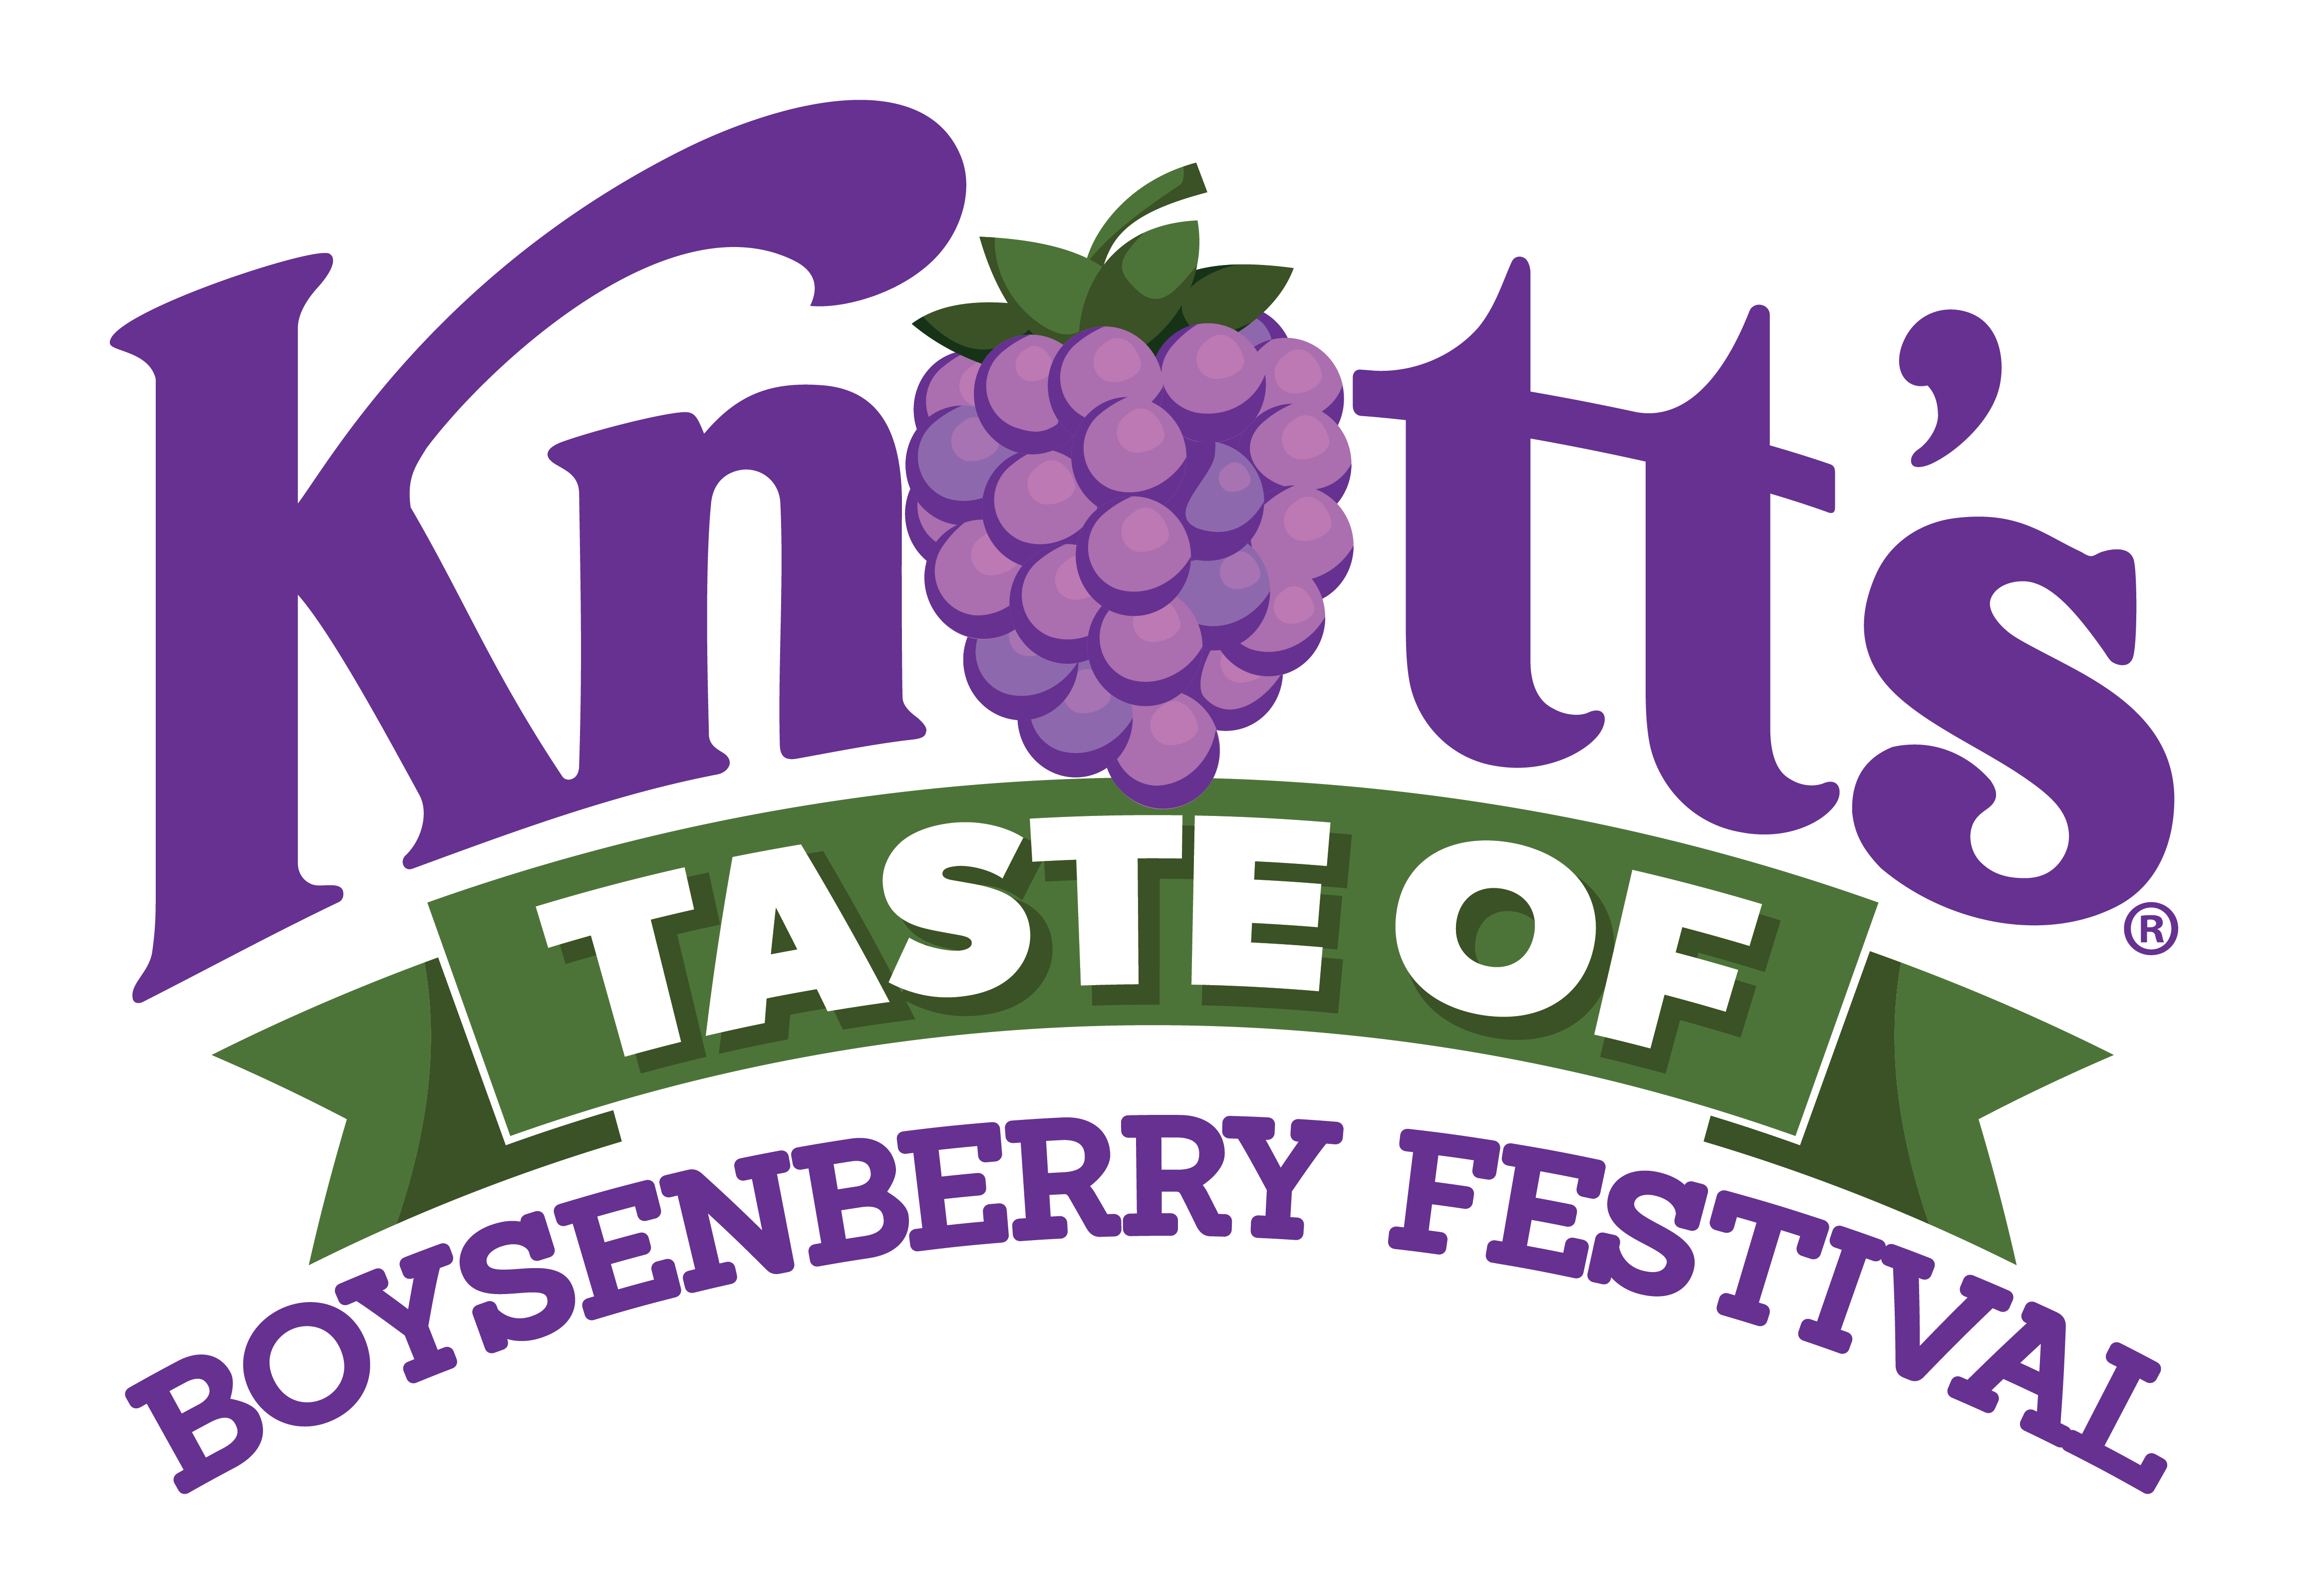 Knott’s Welcomes the Boysenberry Festival Back in Taste of Boysenberry Festival Beginning March 5